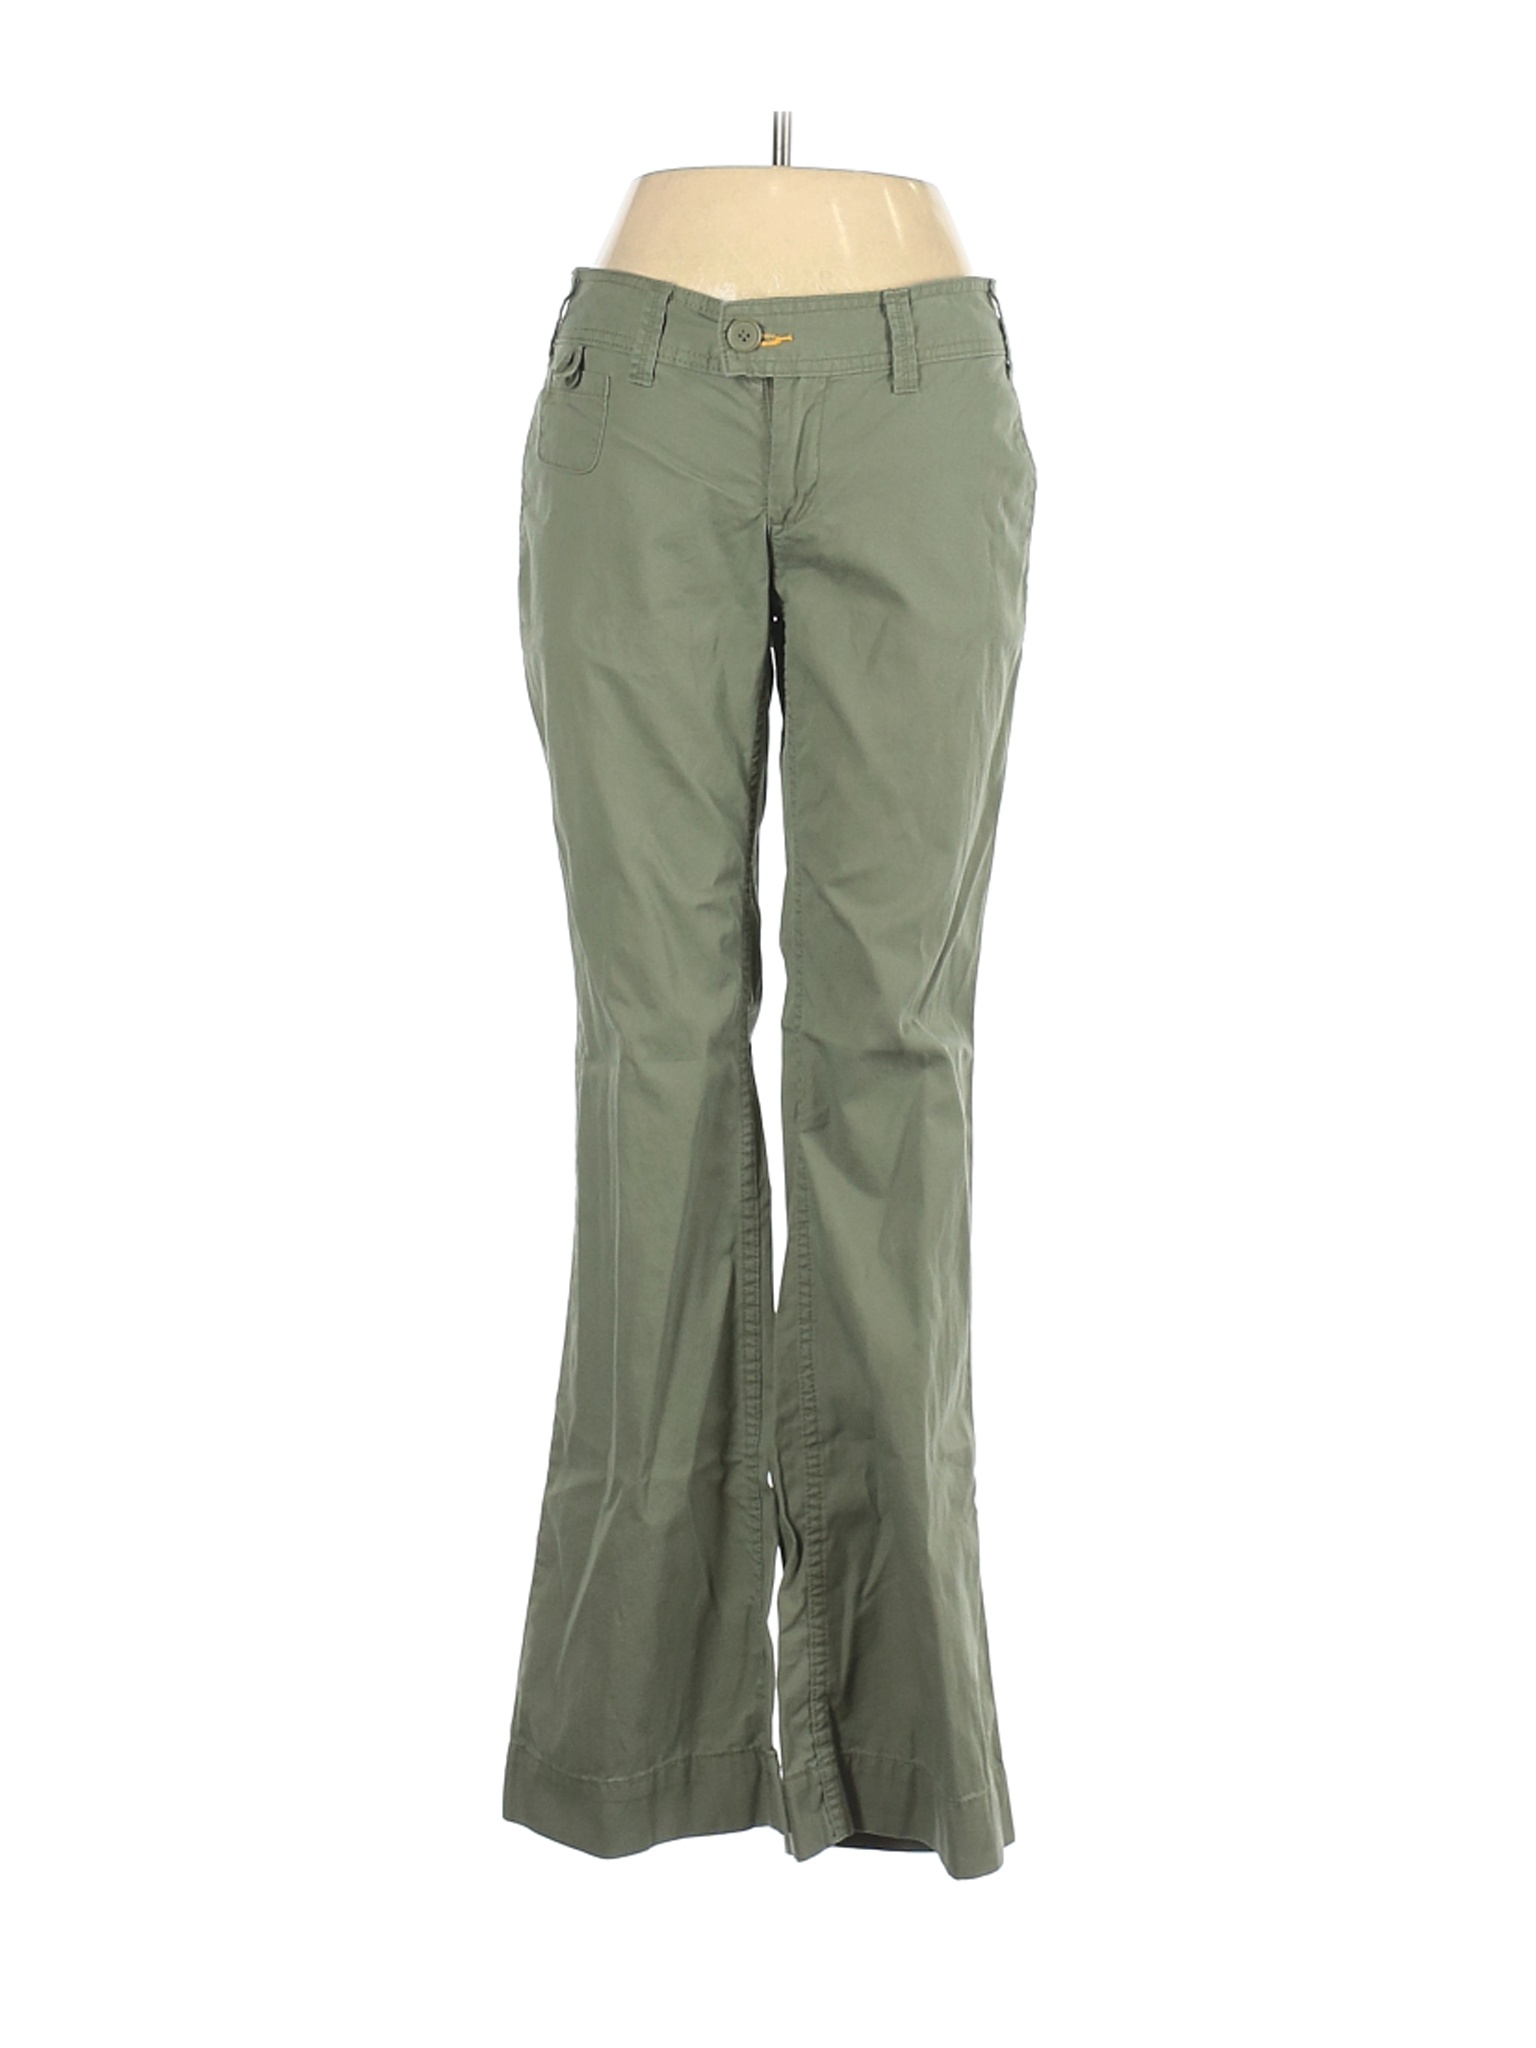 Gap Outlet Women Green Casual Pants 2 | eBay